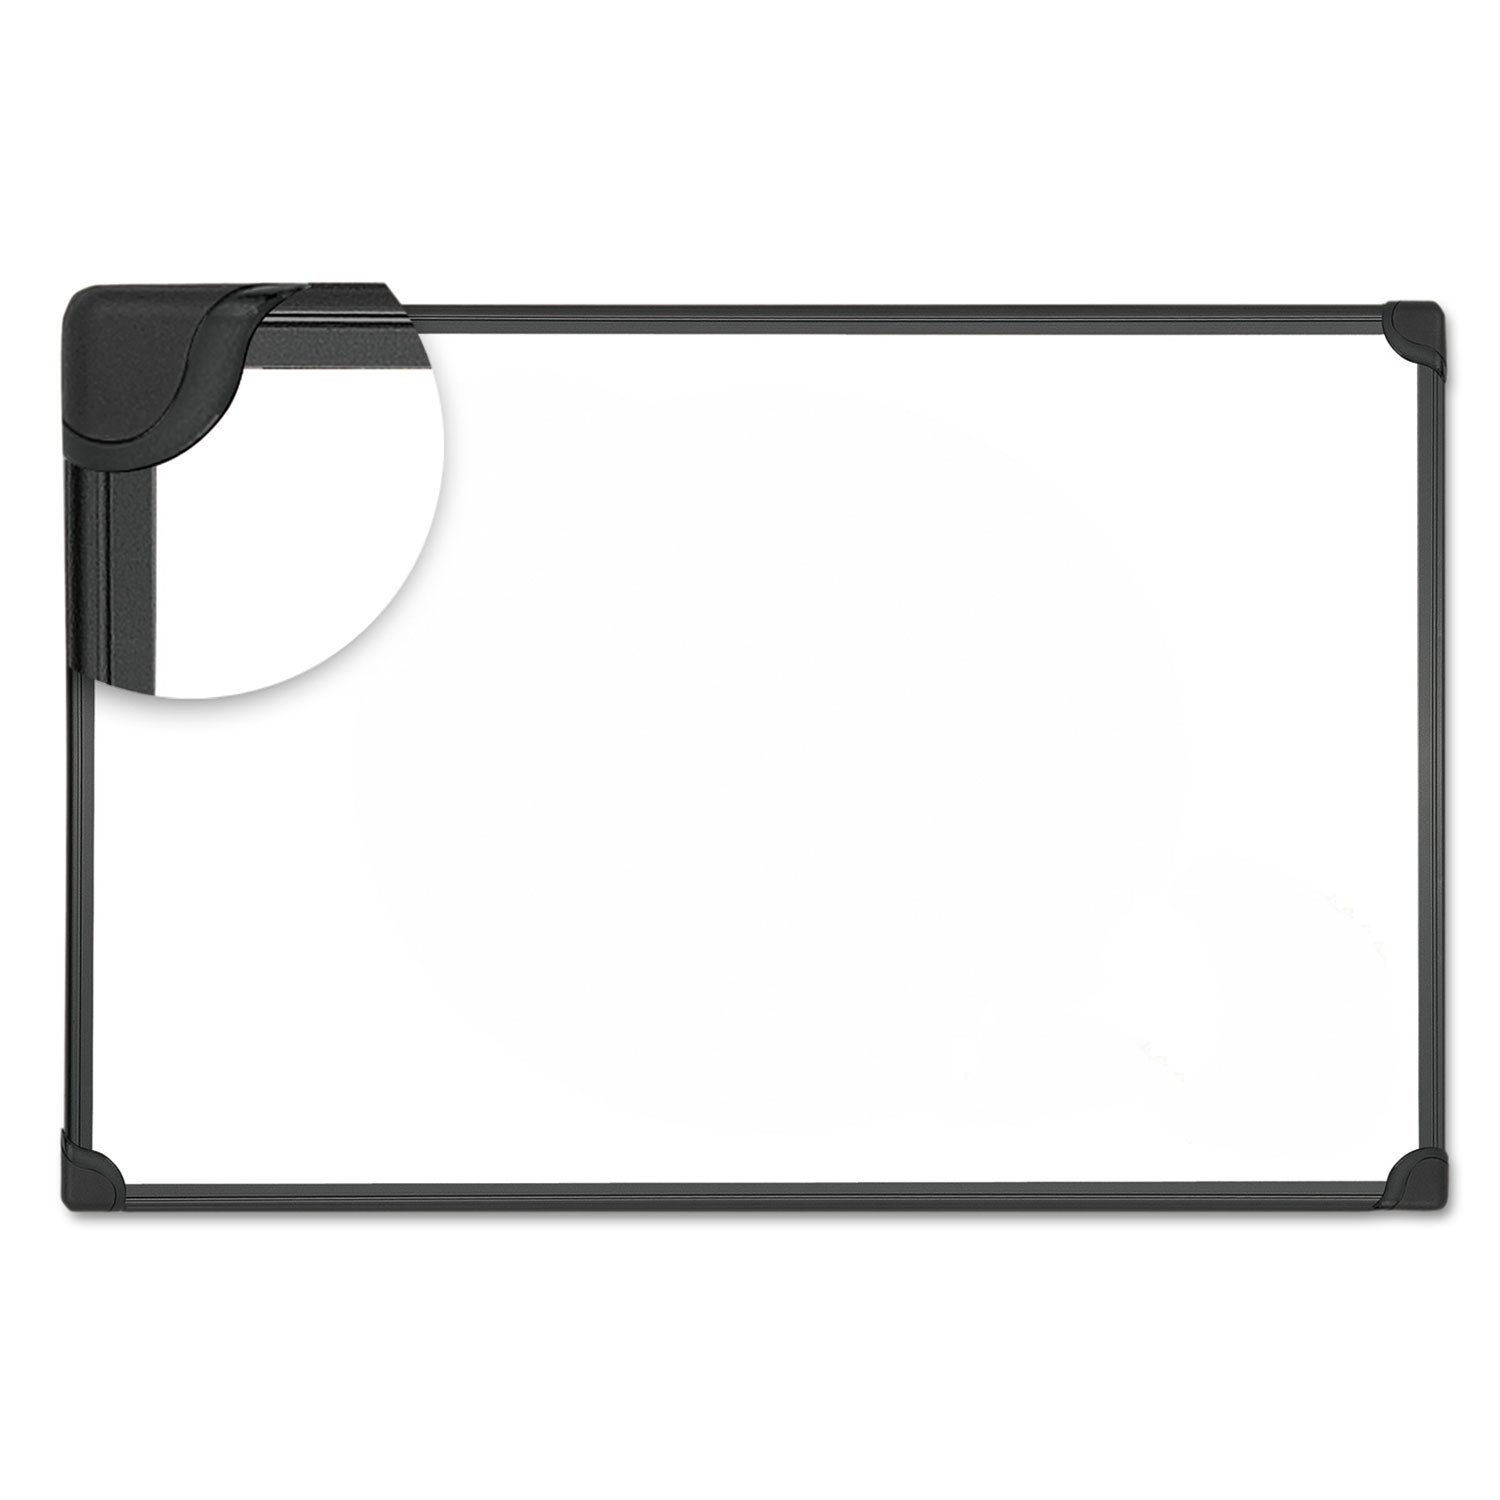  Universal UNV43024 Design Series Magnetic Steel Dry Erase Board, 24 x 18, White, Black Frame (UNV43024) 